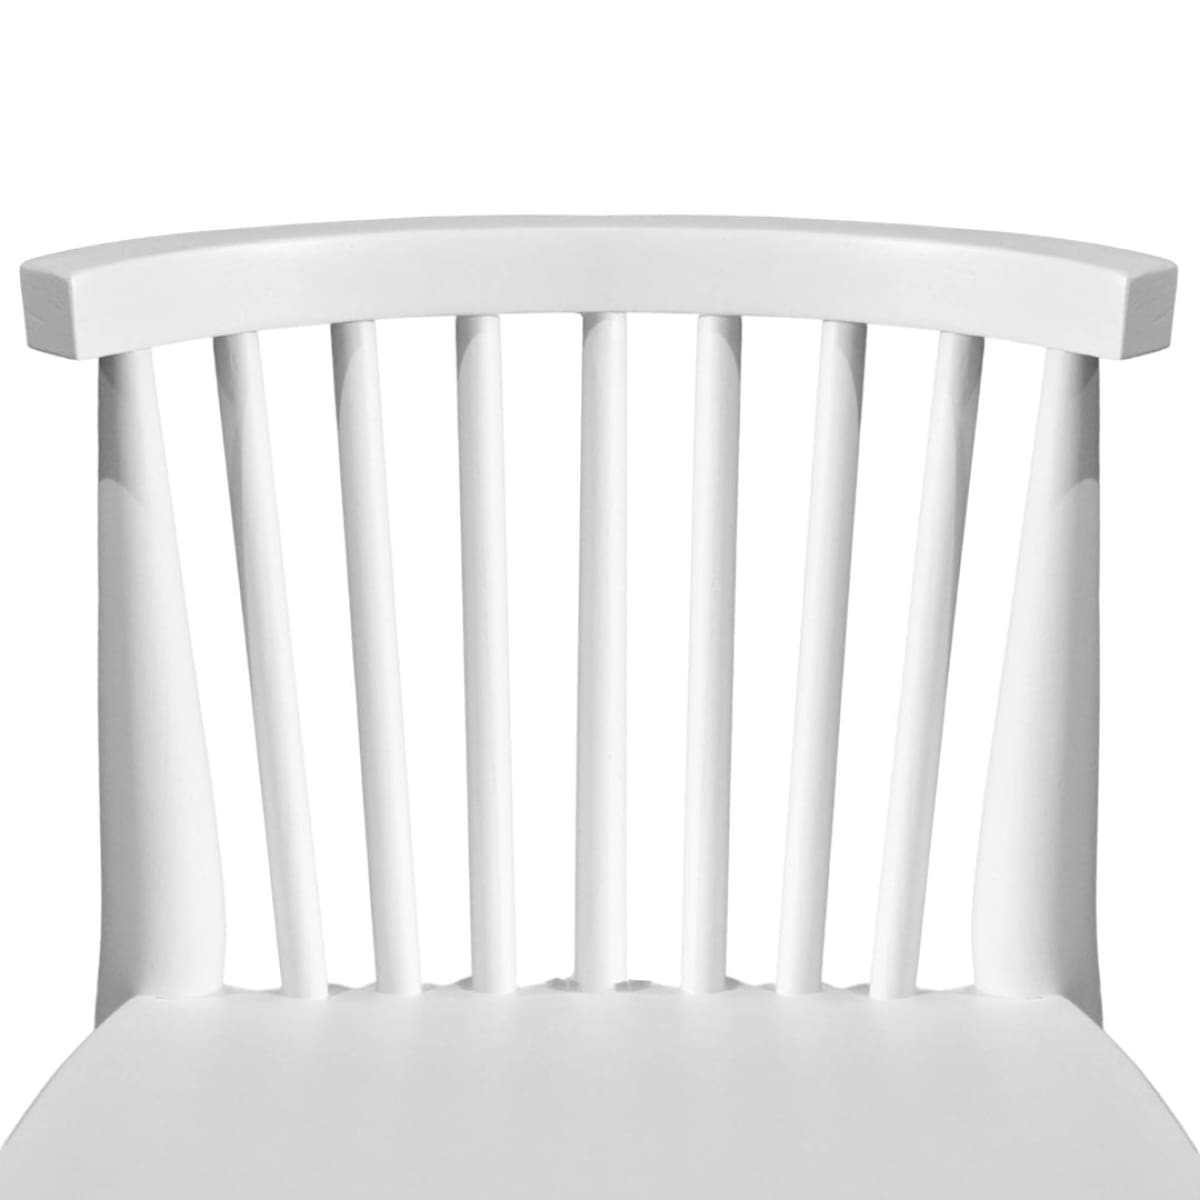 Easton Counter Stool - White - lh-import-stools